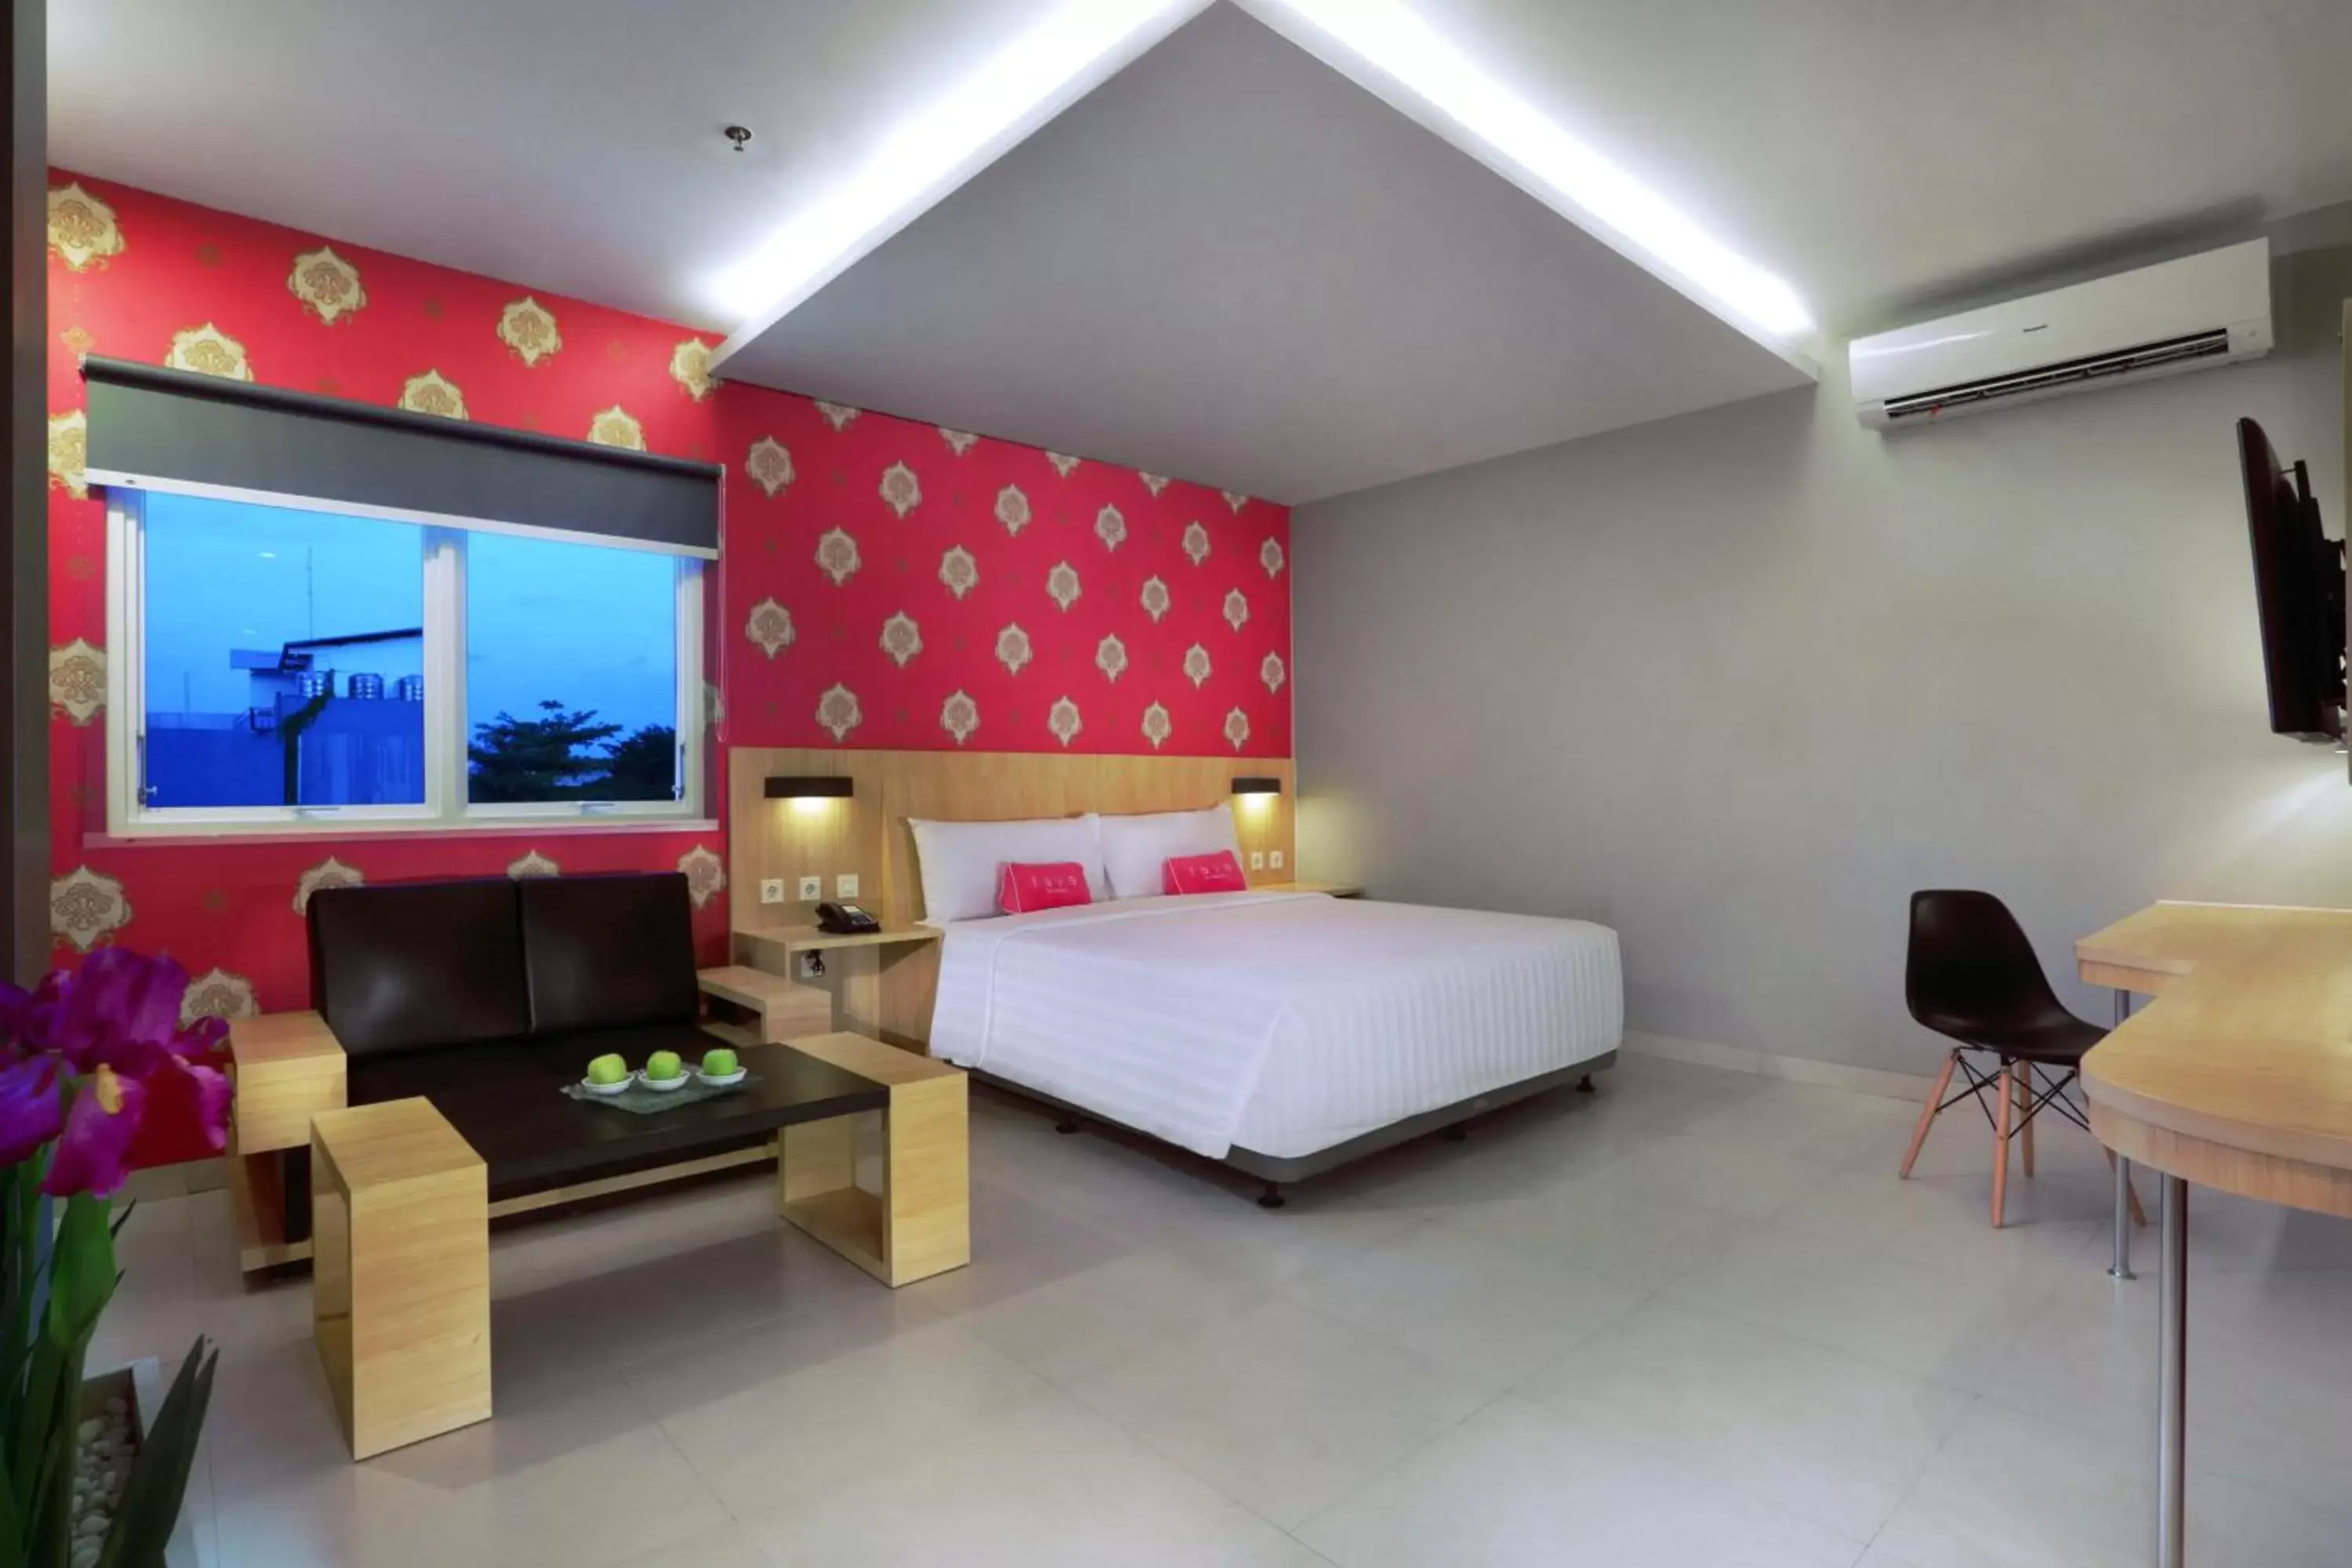 Photo of the whole room in favehotel Ahmad Yani Banjarmasin